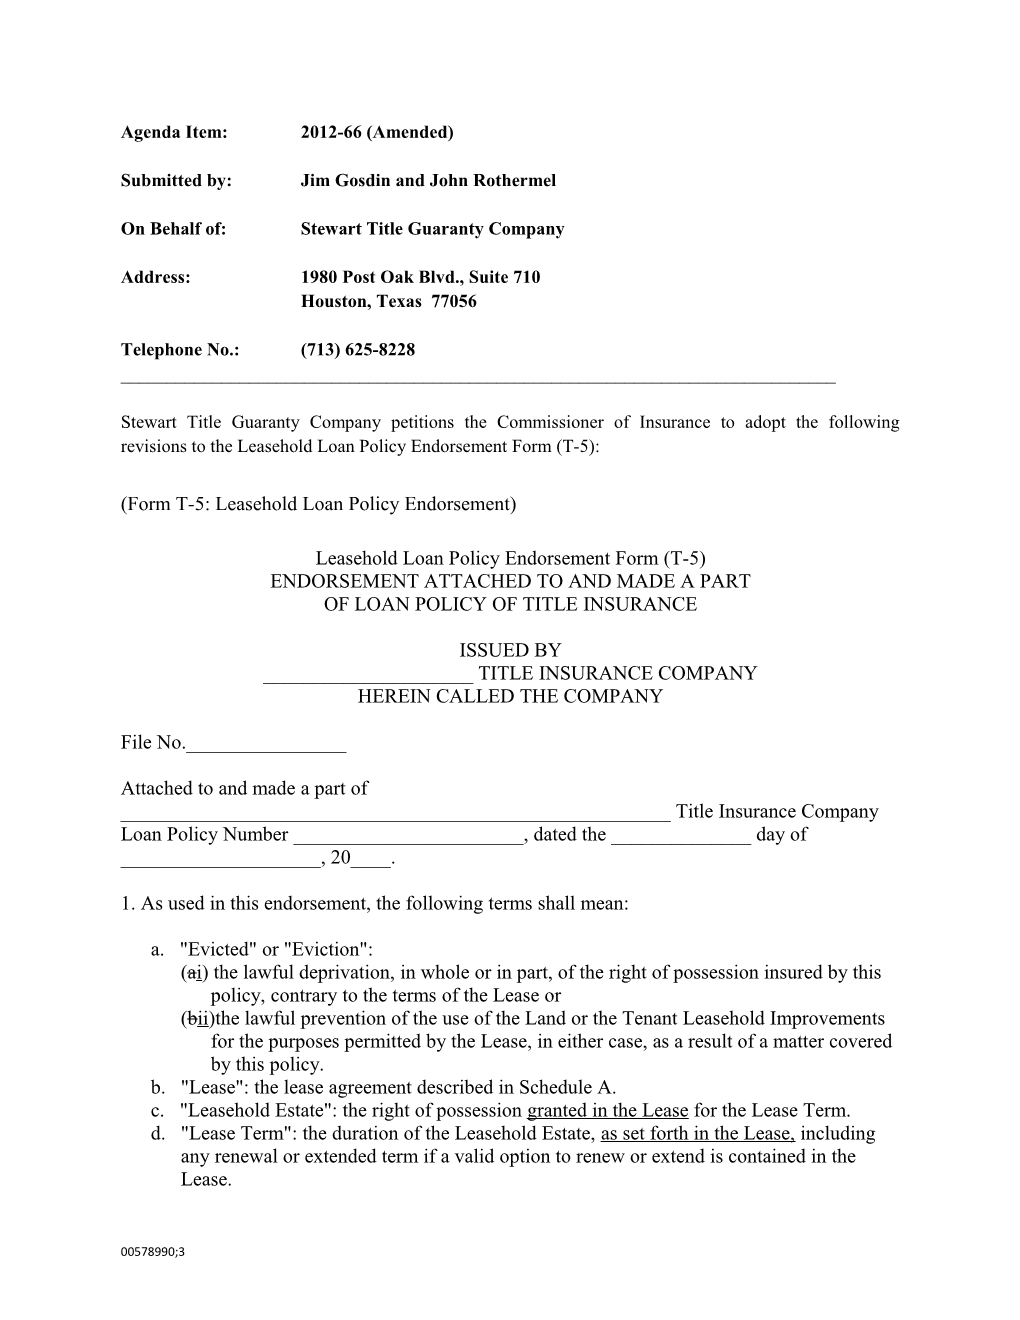 STGC Agenda Item 2012-66 Amendment to T-5 (Amended) (00578990-3)